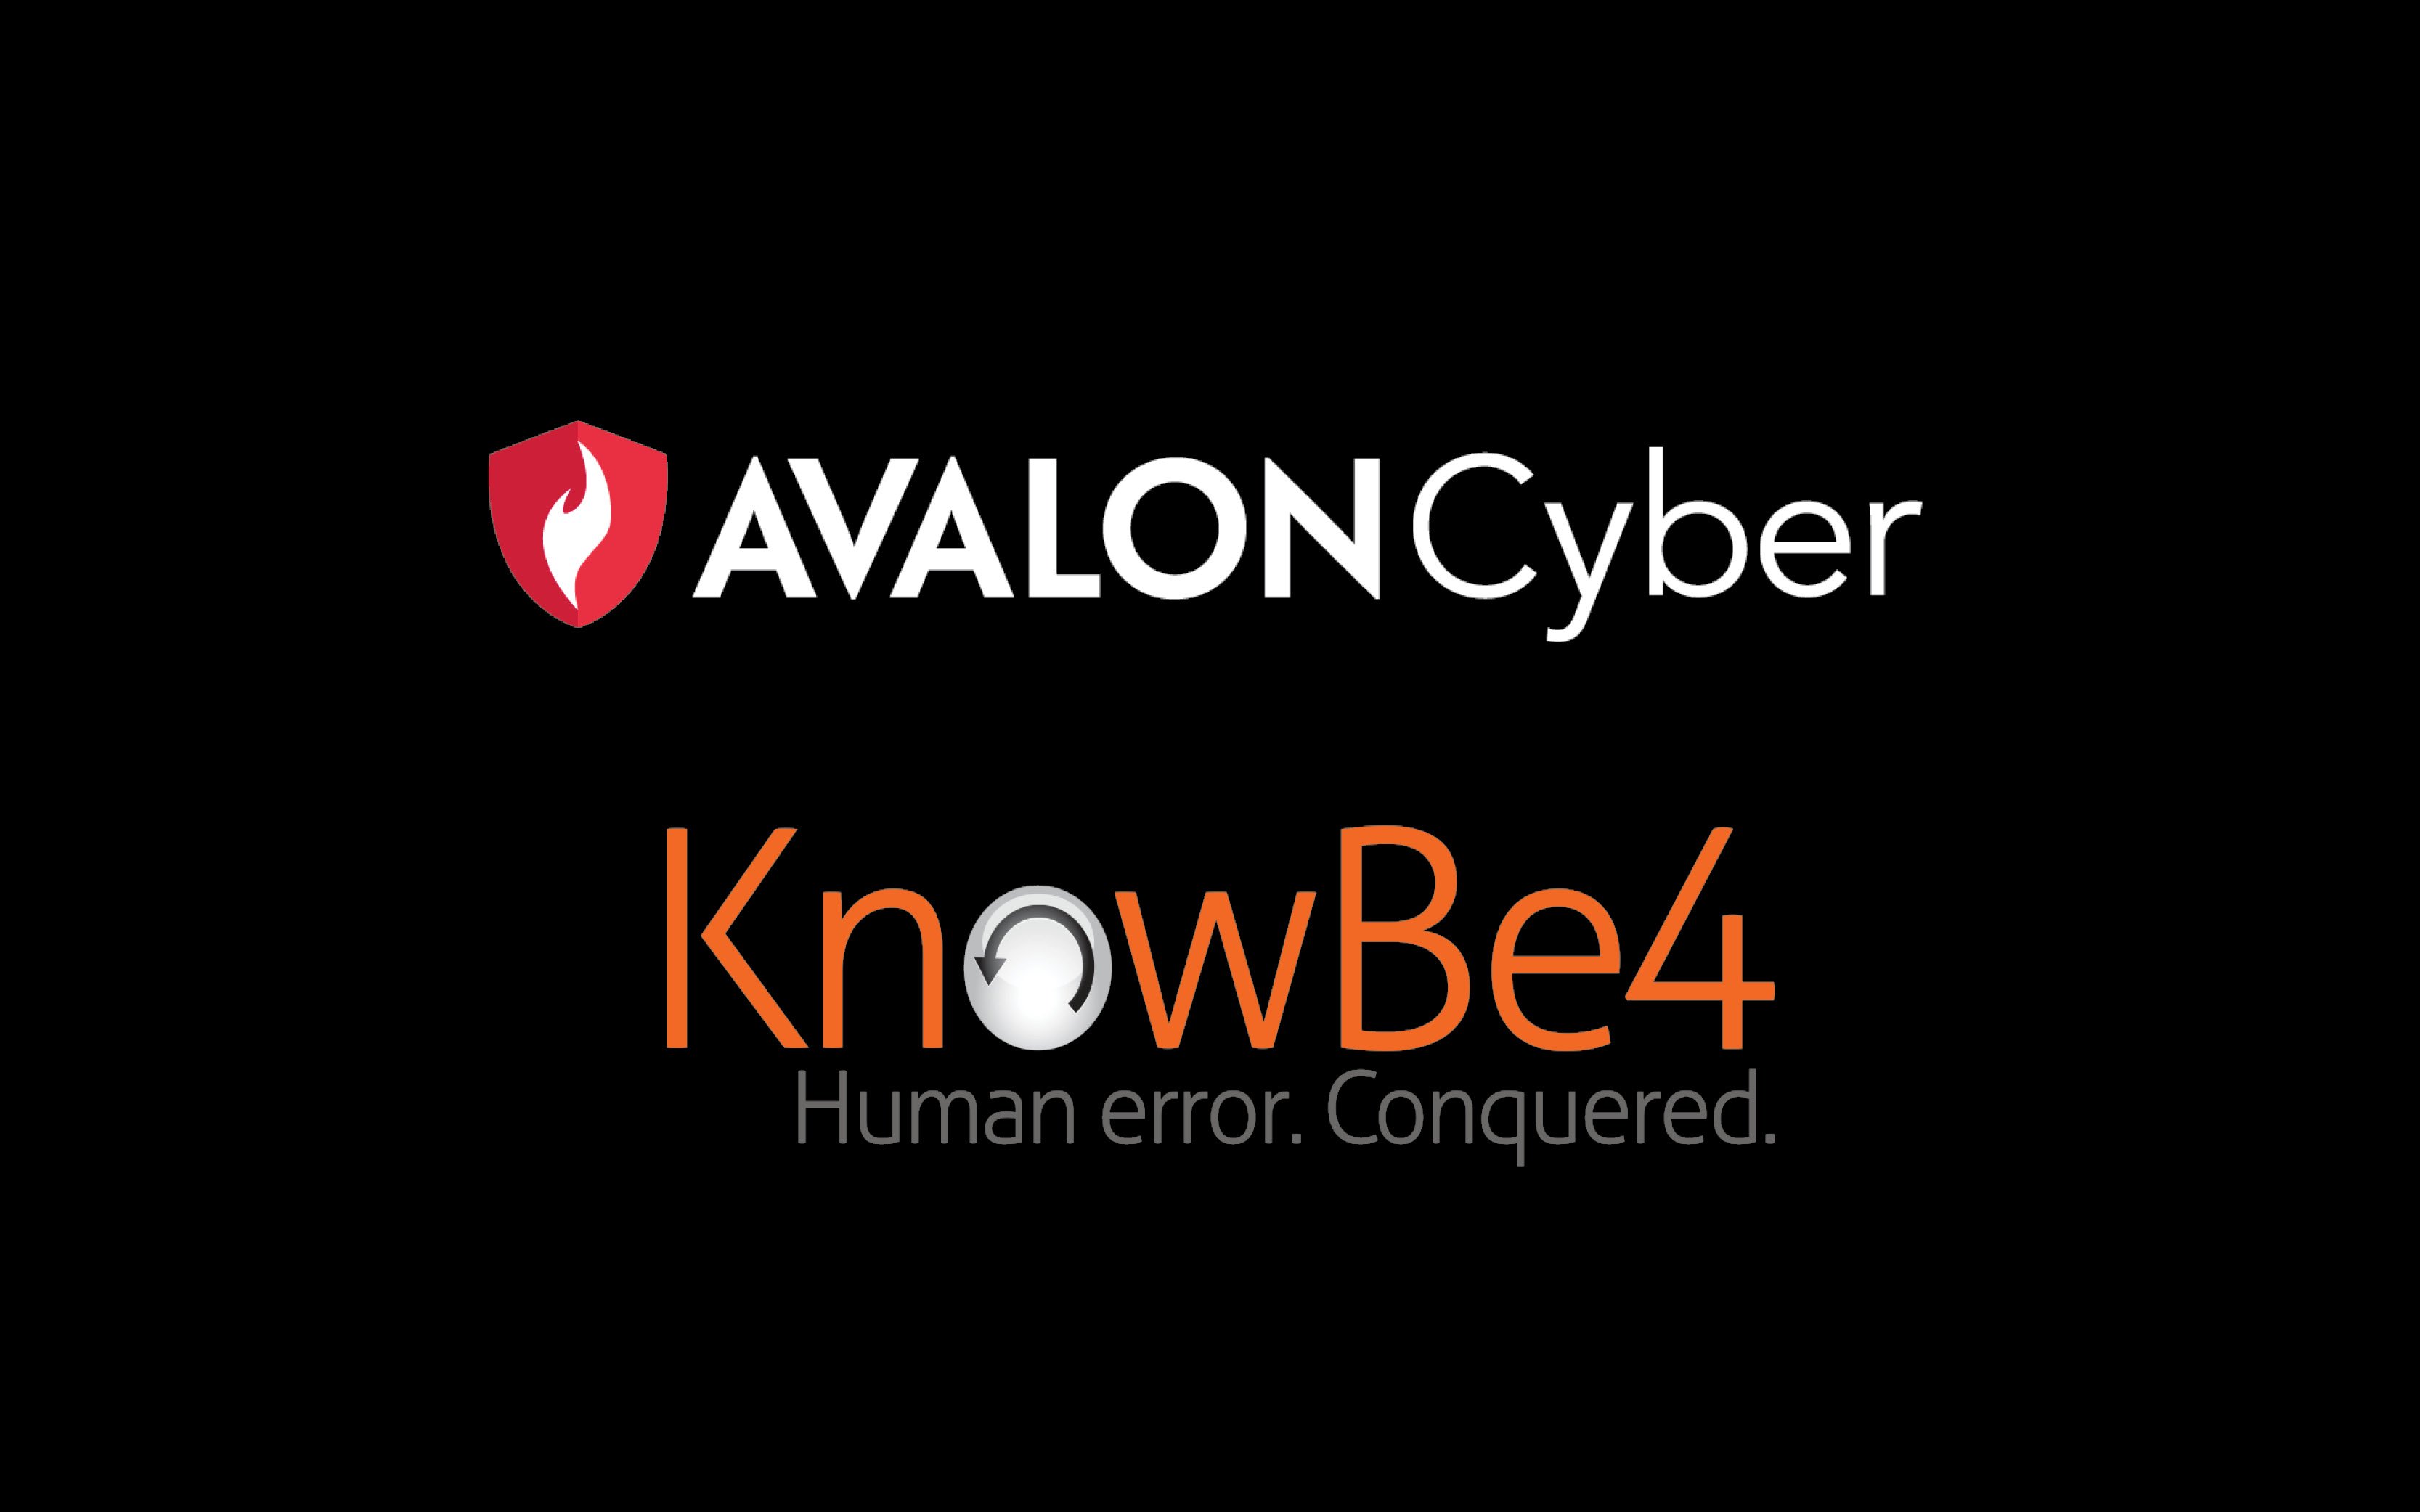 Avalon Cyber KnowBe4